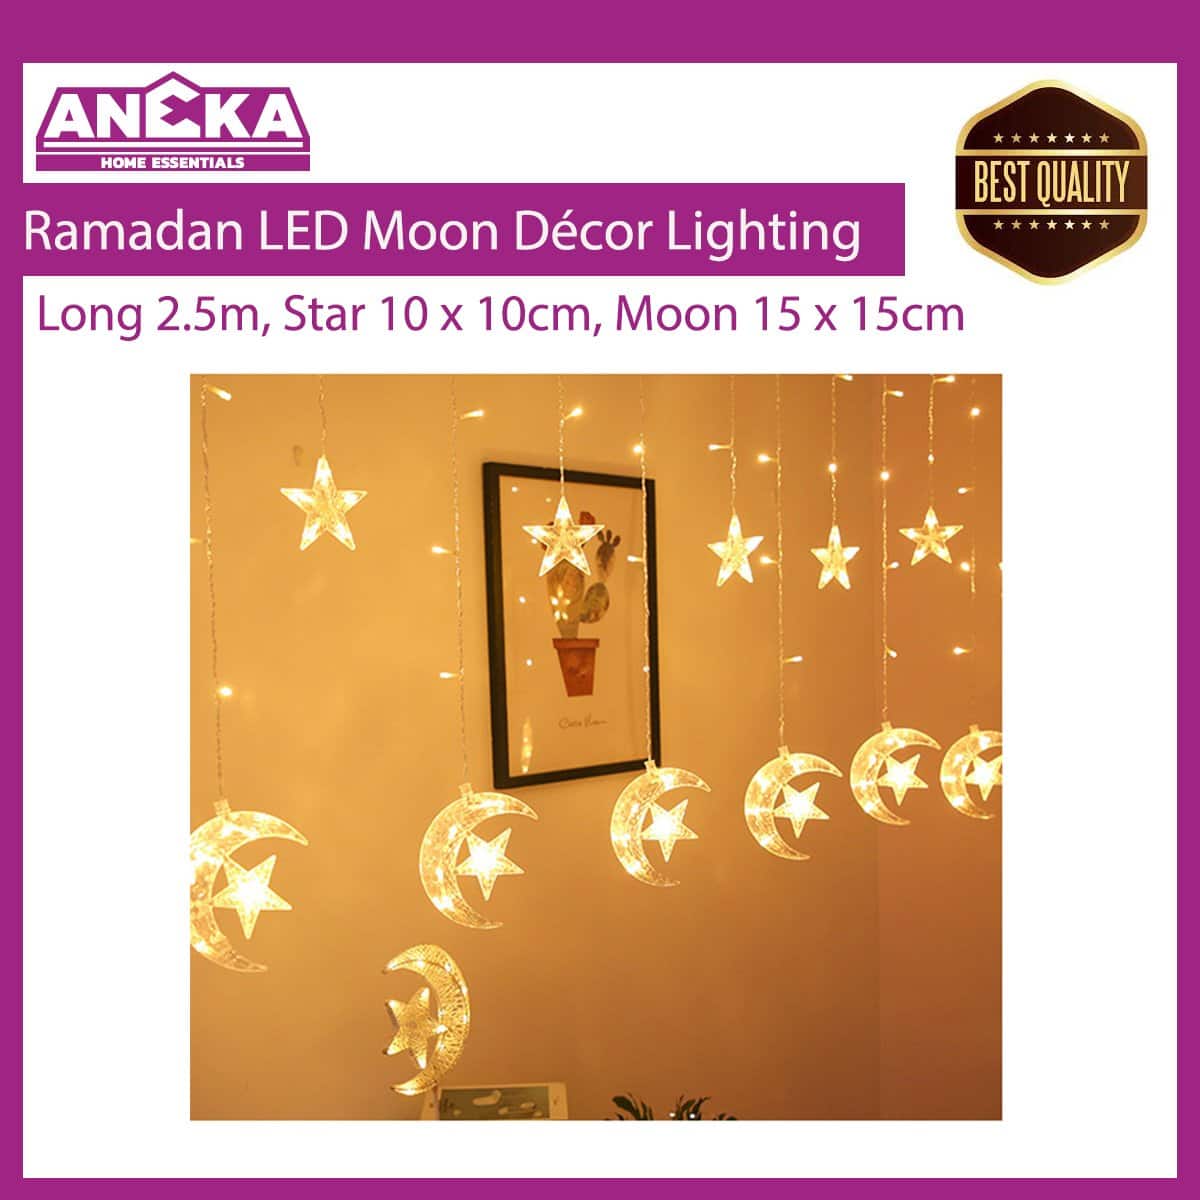 Ramadan LED Moon DÃ©cor Lighting